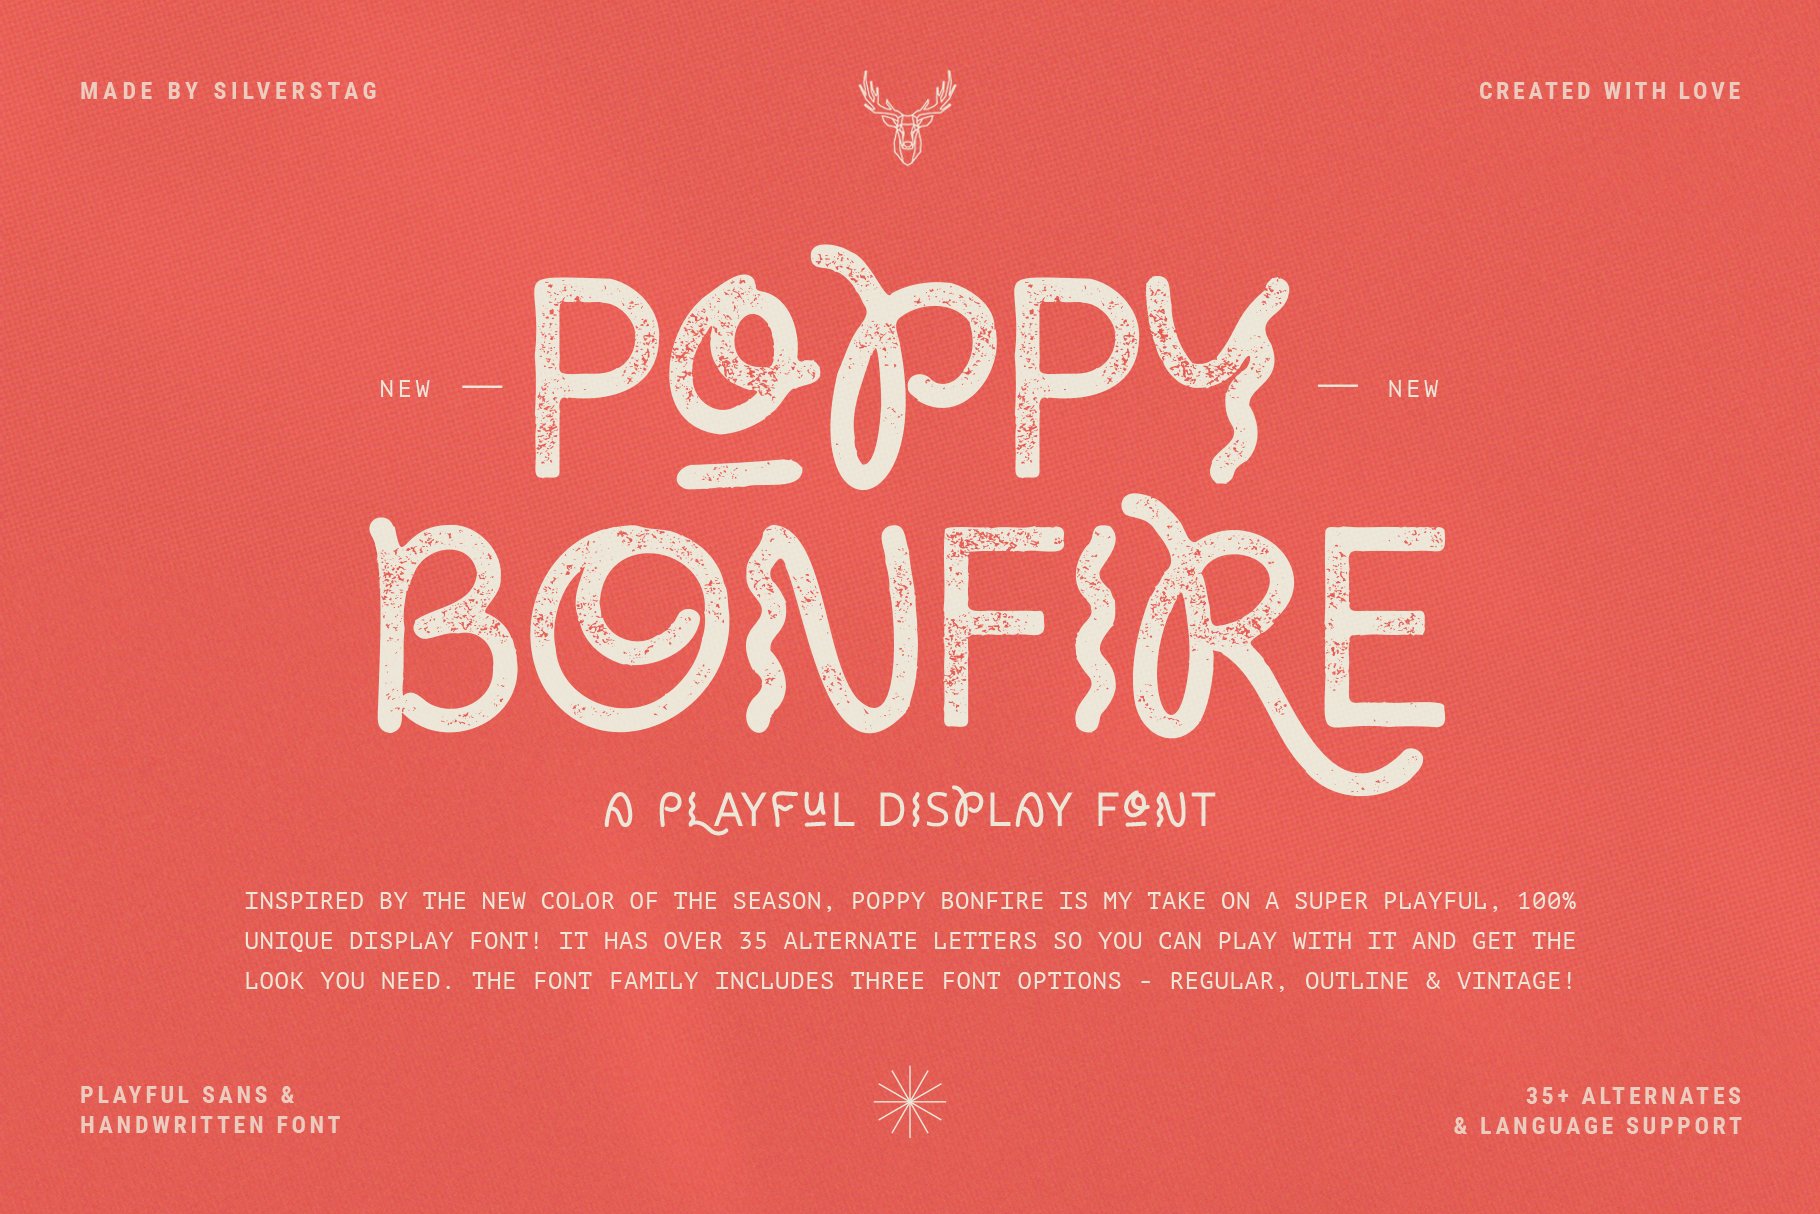 Poppy Bonfire - Modern Display Font cover image.